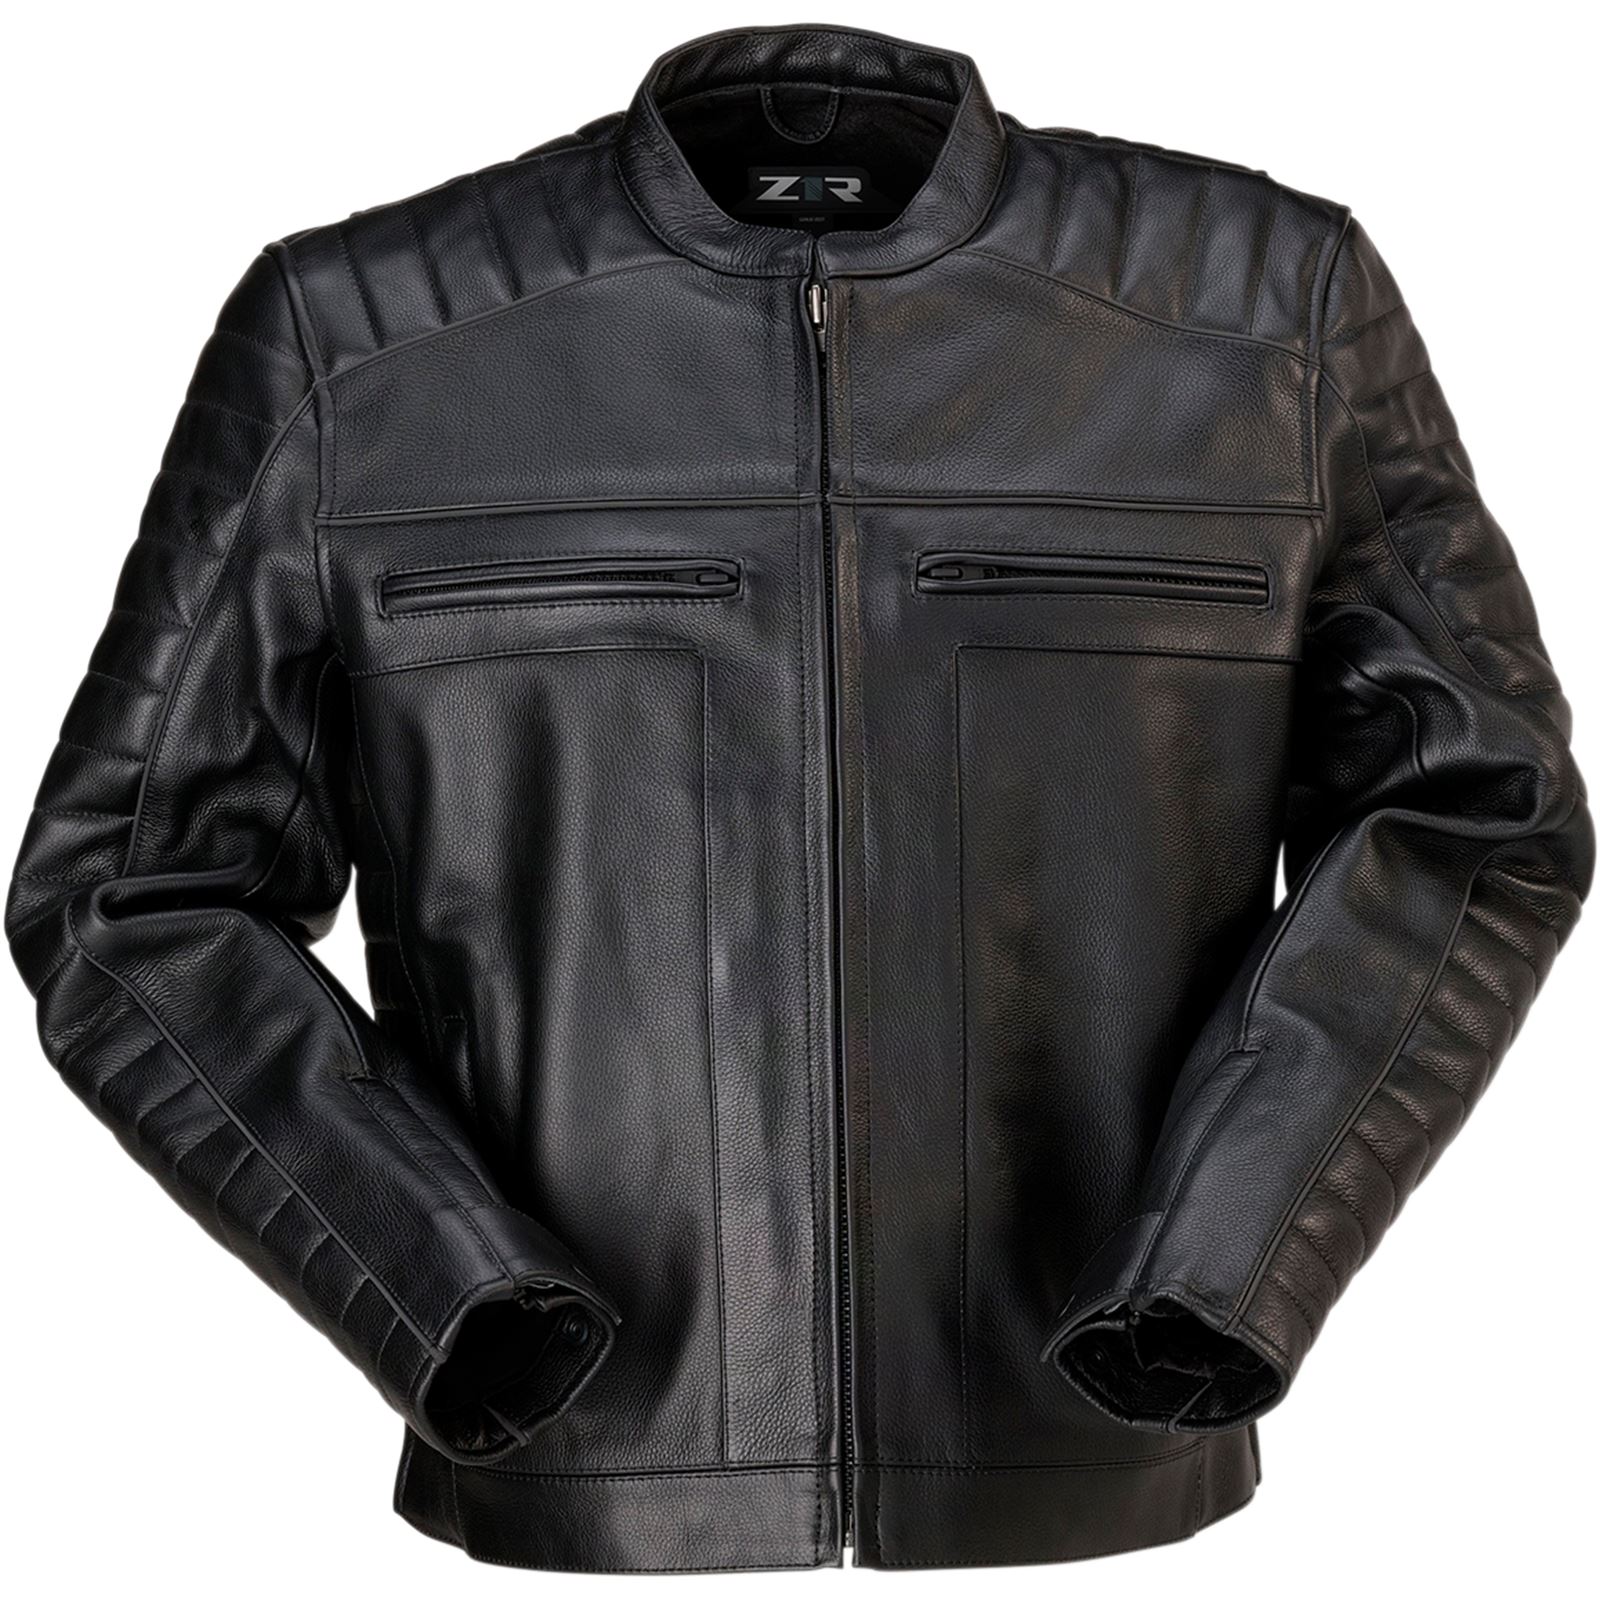 Z1R Artillery Leather Jacket - Black